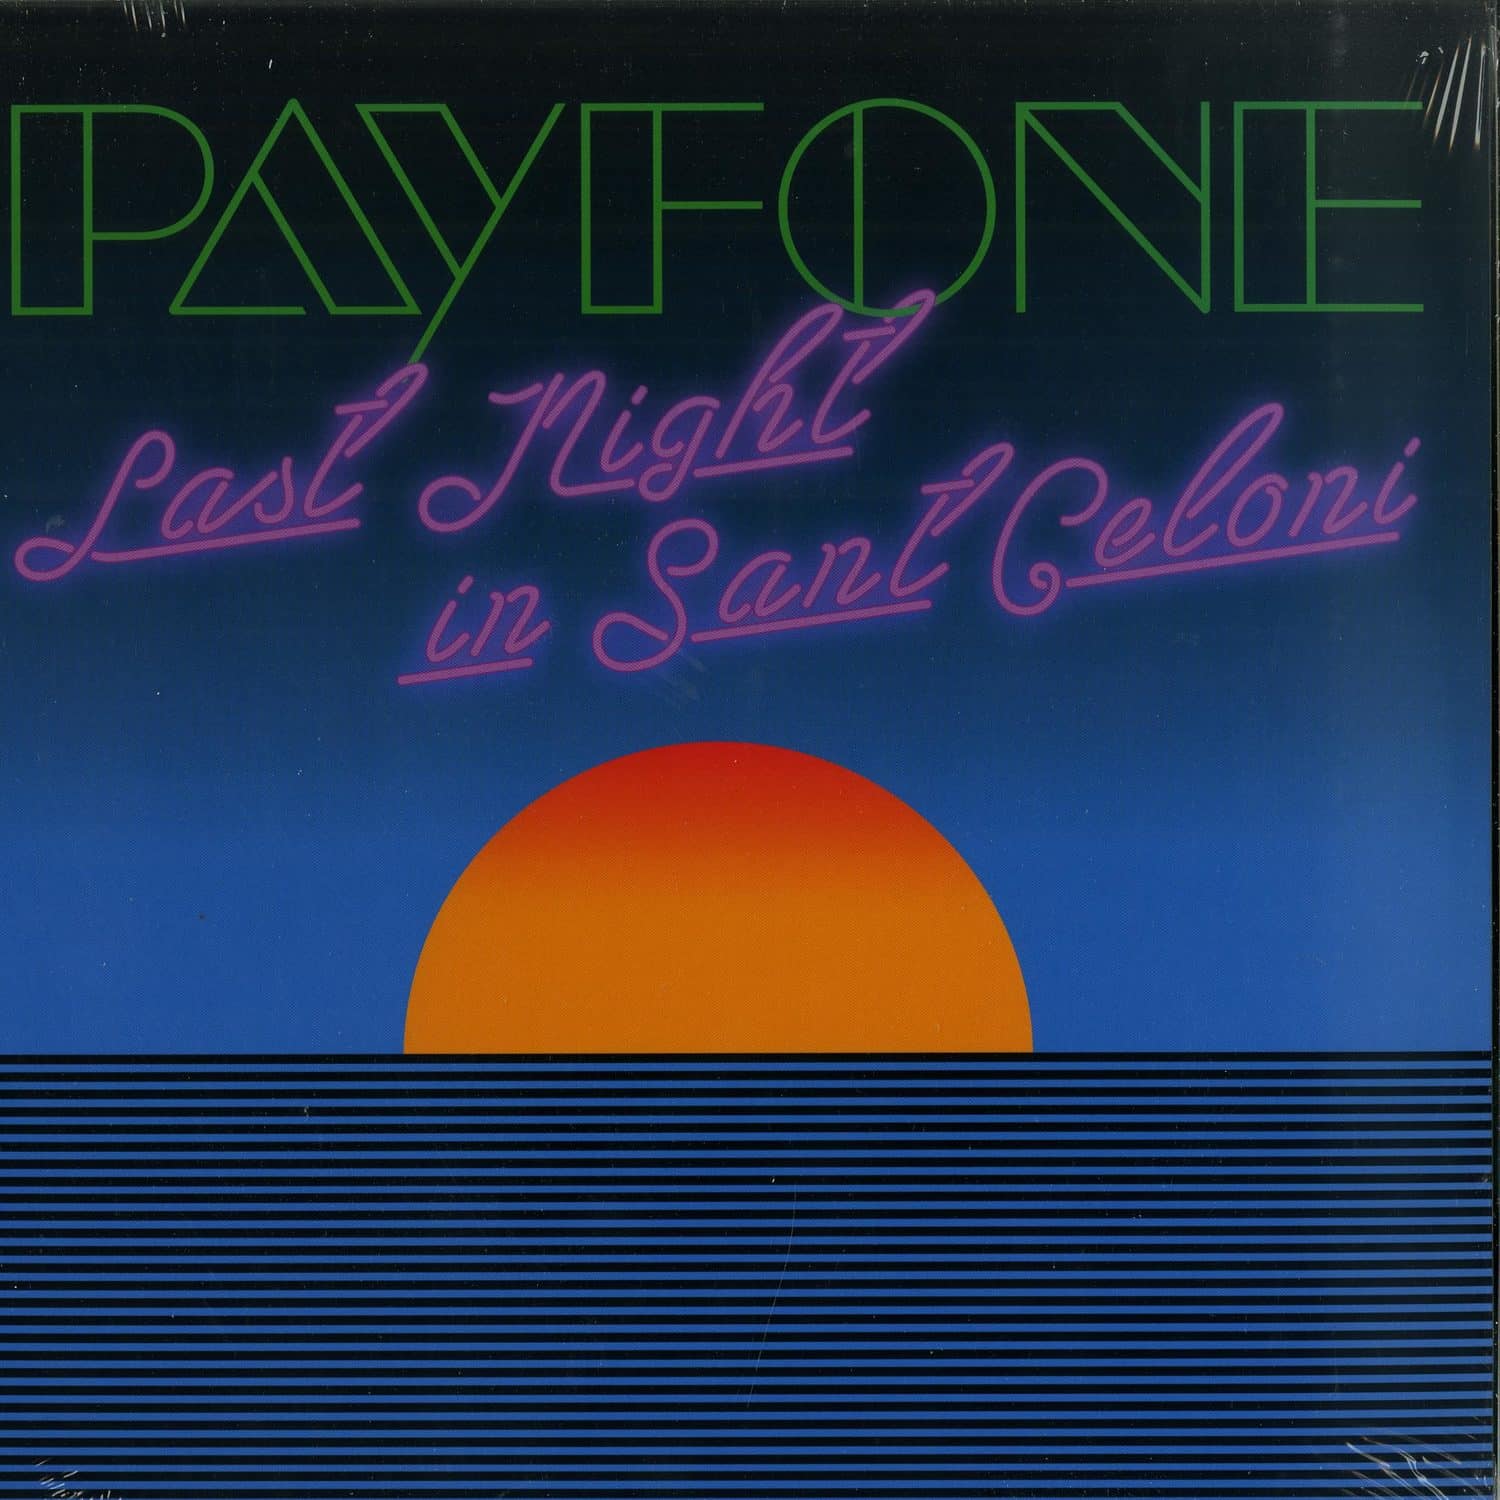 Payfone - LAST NIGHT IN SANT CELONI